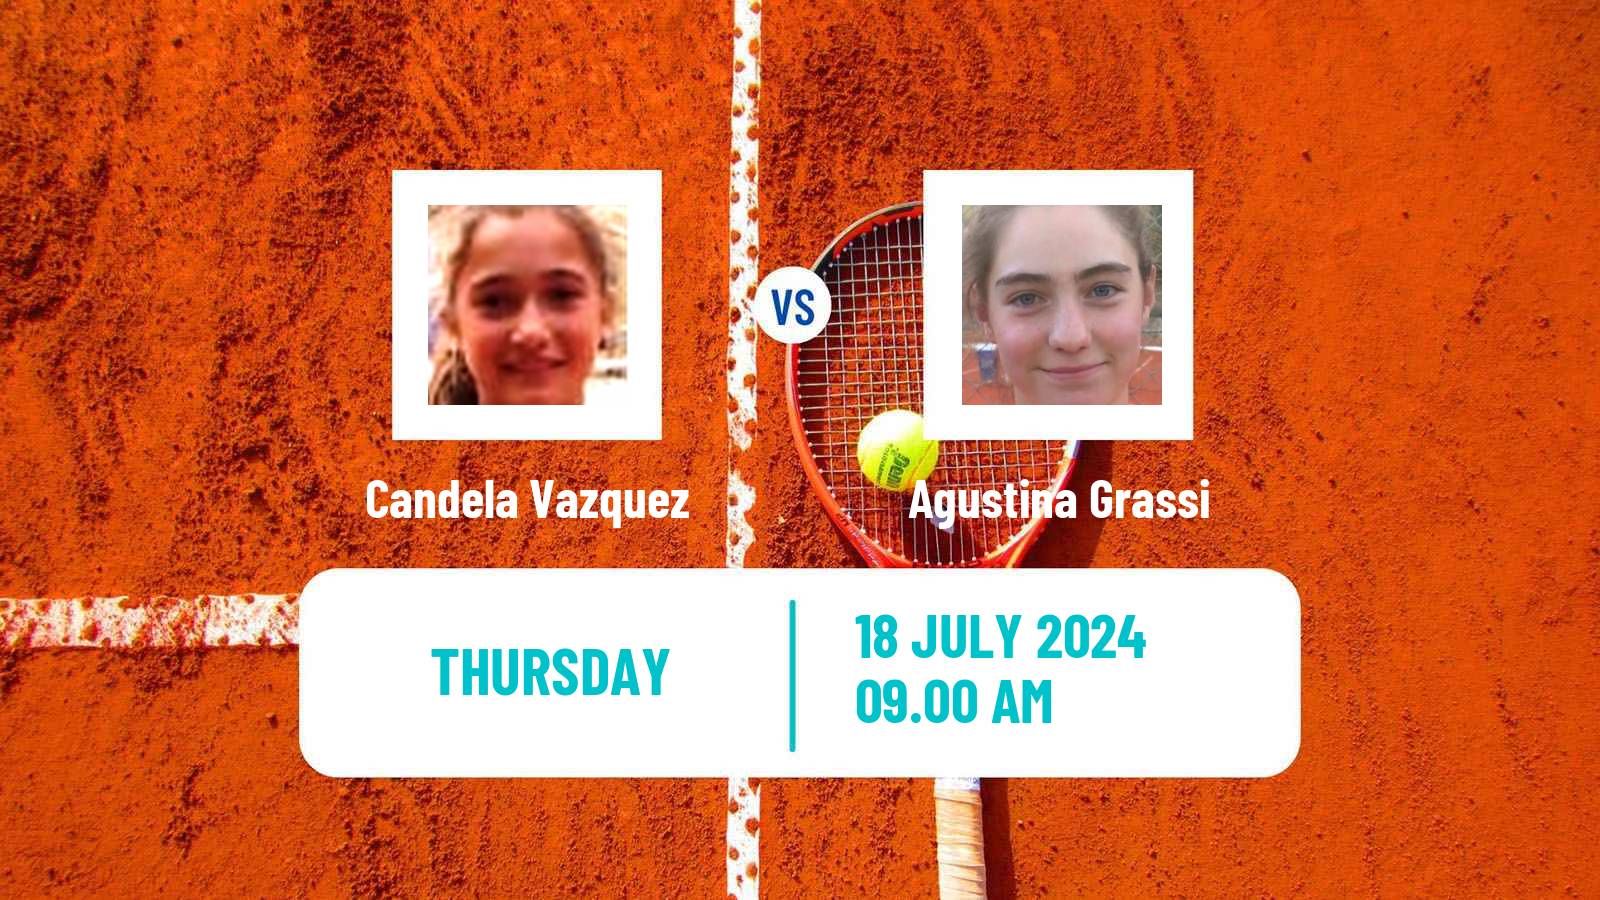 Tennis ITF W15 Lujan 2 Women Candela Vazquez - Agustina Grassi